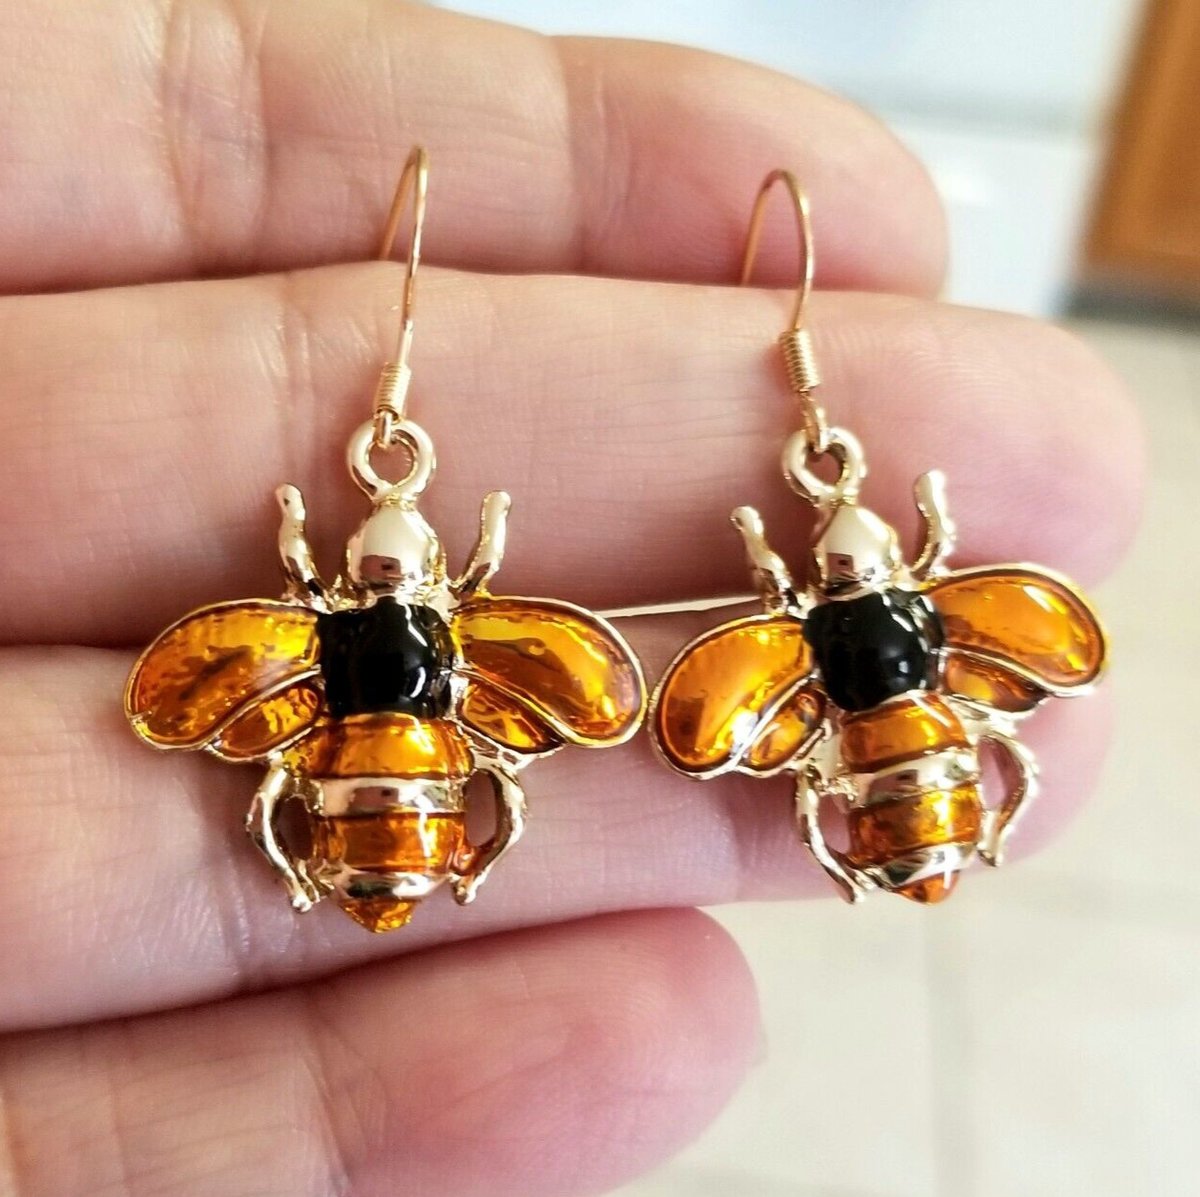 14k Gold Bumble Bee Earrings Amber Bumblebee Earrings #BeeJewelry #Bees #Bee #Bumblebee #insects #jewelry #goldearrings #earrings #handmadejewelry #giftsforher #handmadegifts #womensfashion #fashion #style #jewelry #jewelryaddict 

 ebay.com/itm/2758589054… #eBay via @eBay